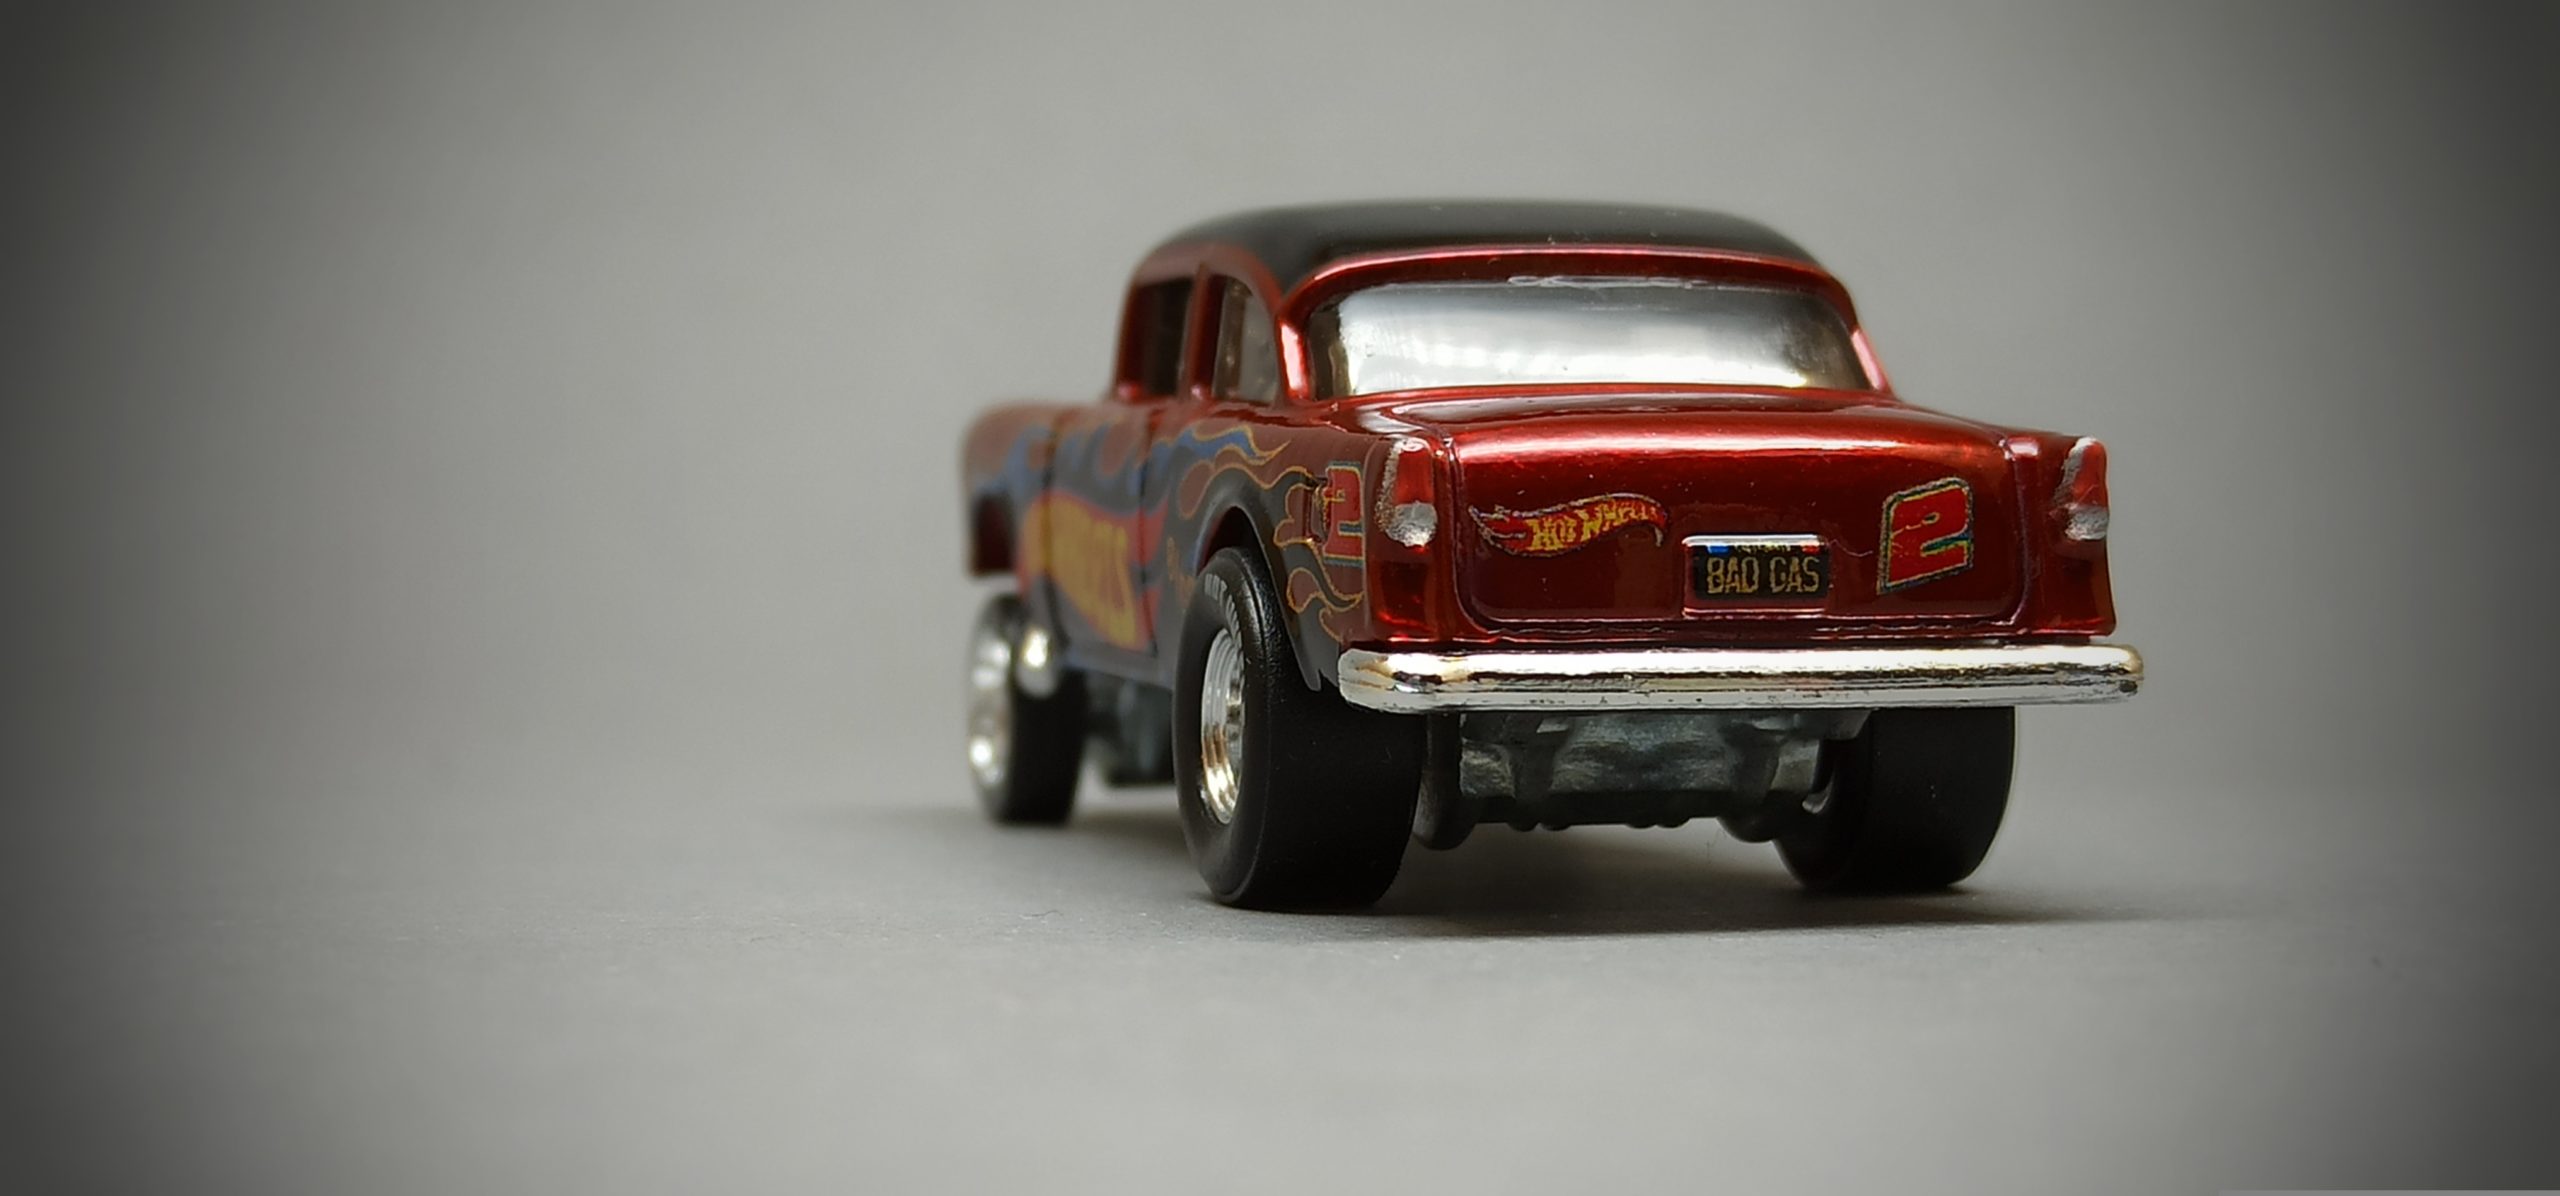 Hot Wheels '55 Chevy Bel Air Gasser (FKF90)  2018 Collector Edition (Kmart Mail-in) dark red